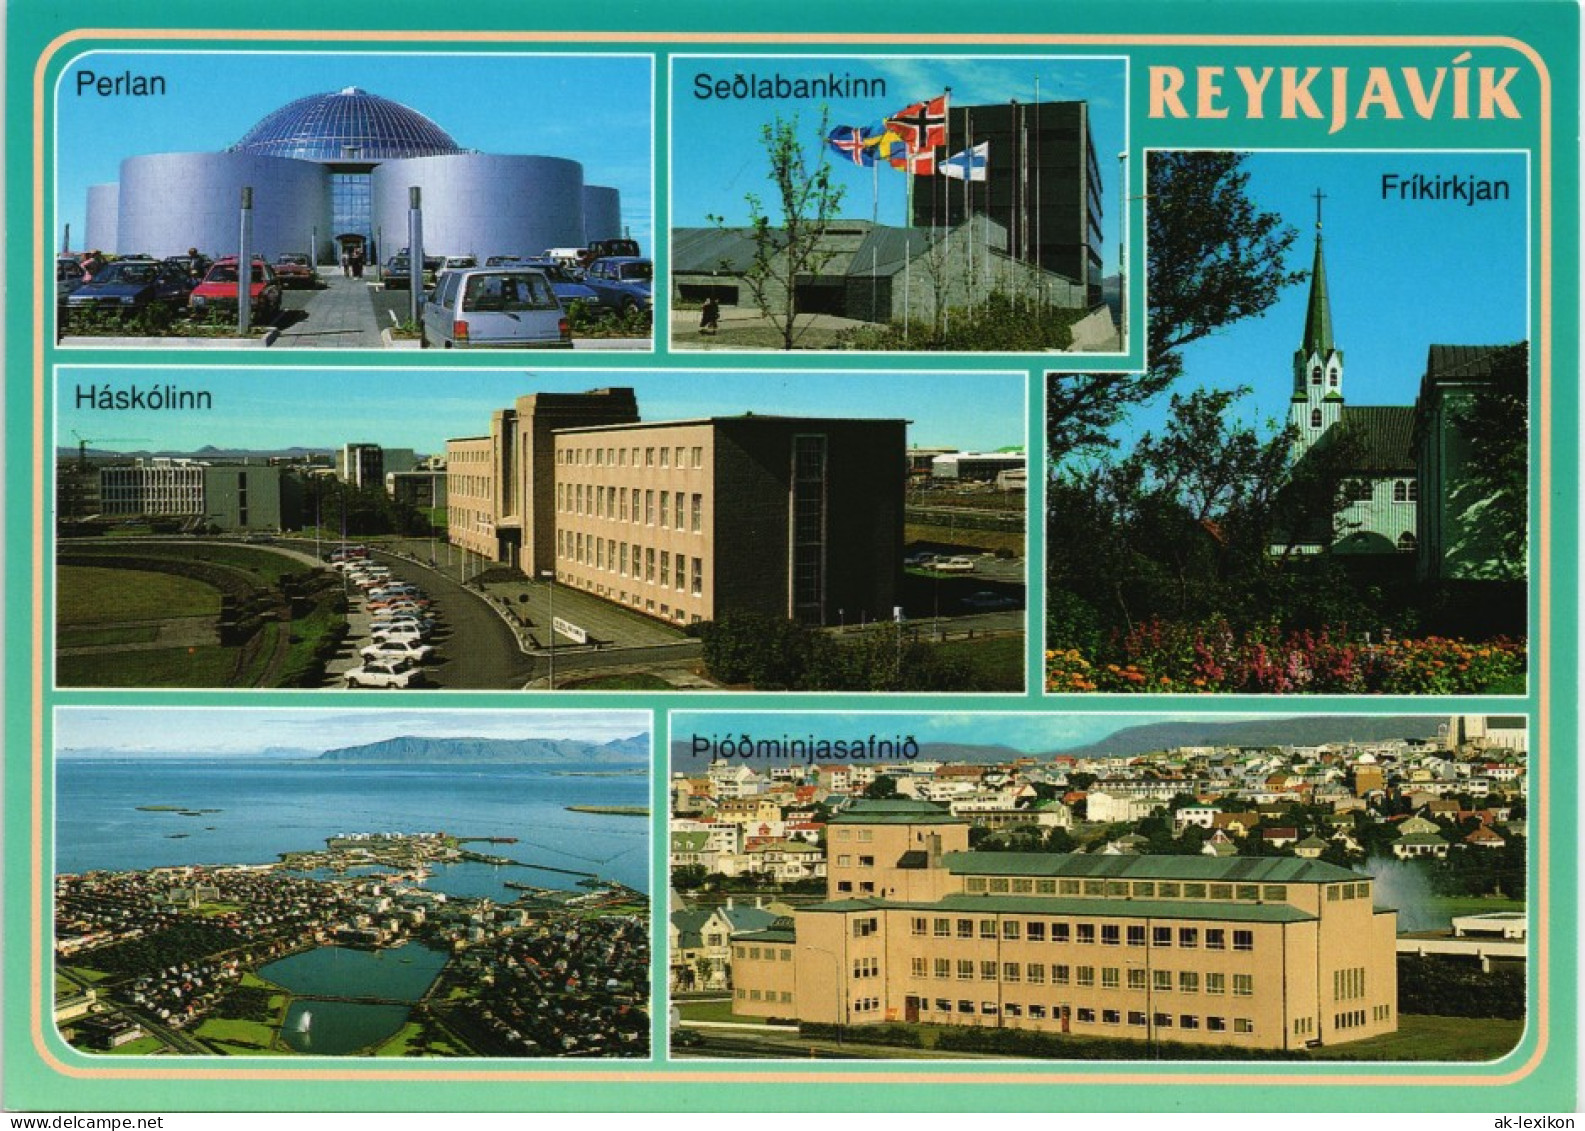 Reykjavík  Central Bank, Perlan Restaurant Uvm. Iceland Postcard 2000 - Island